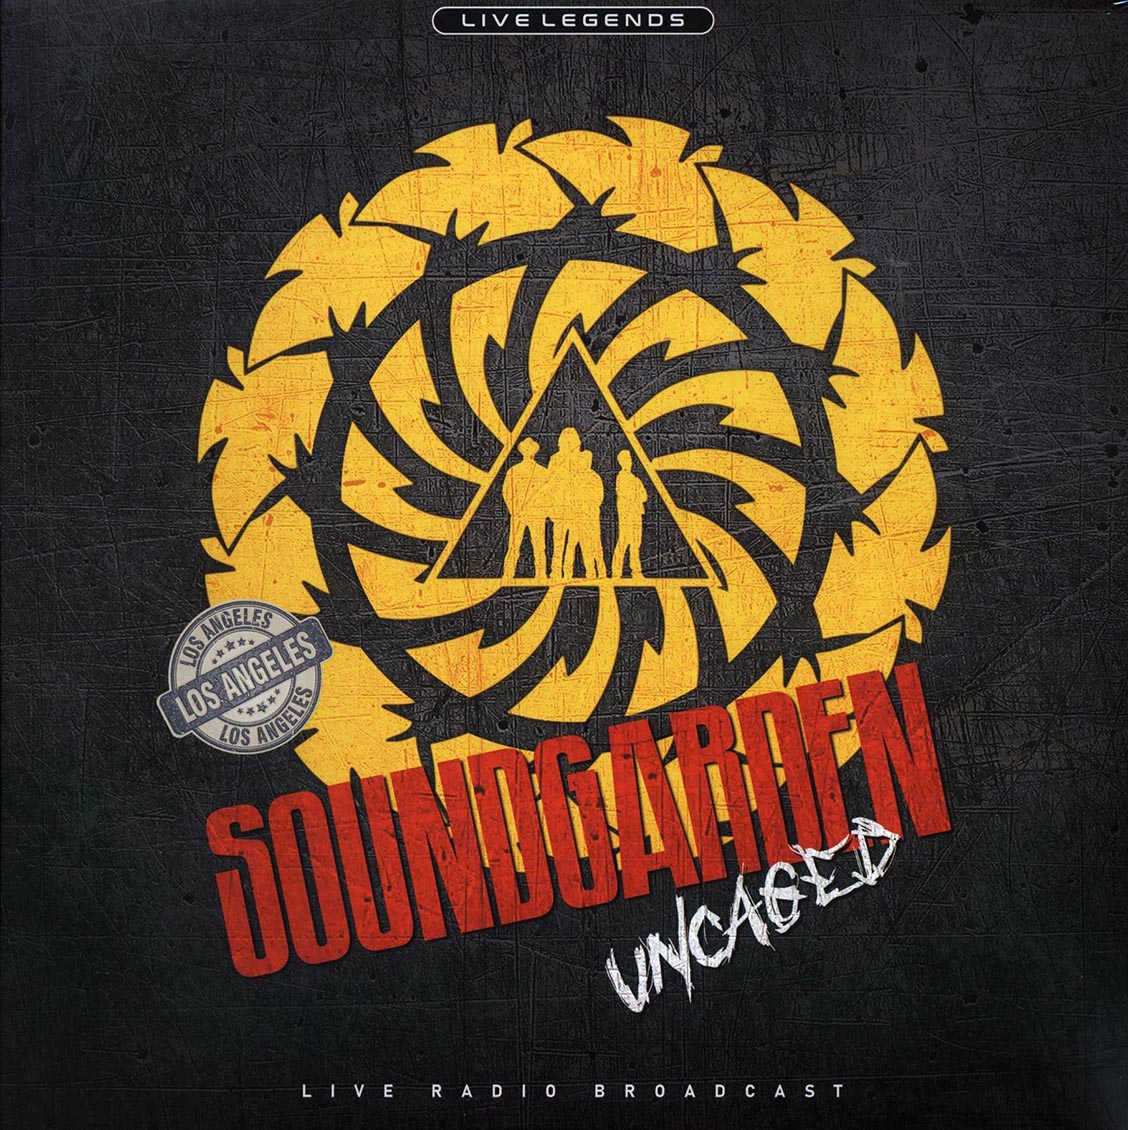 Soundgarden - Uncaged: Live At The Palladium, Hollywood, 1992 (ltd. ed.) (clear vinyl) - Vinyl LP